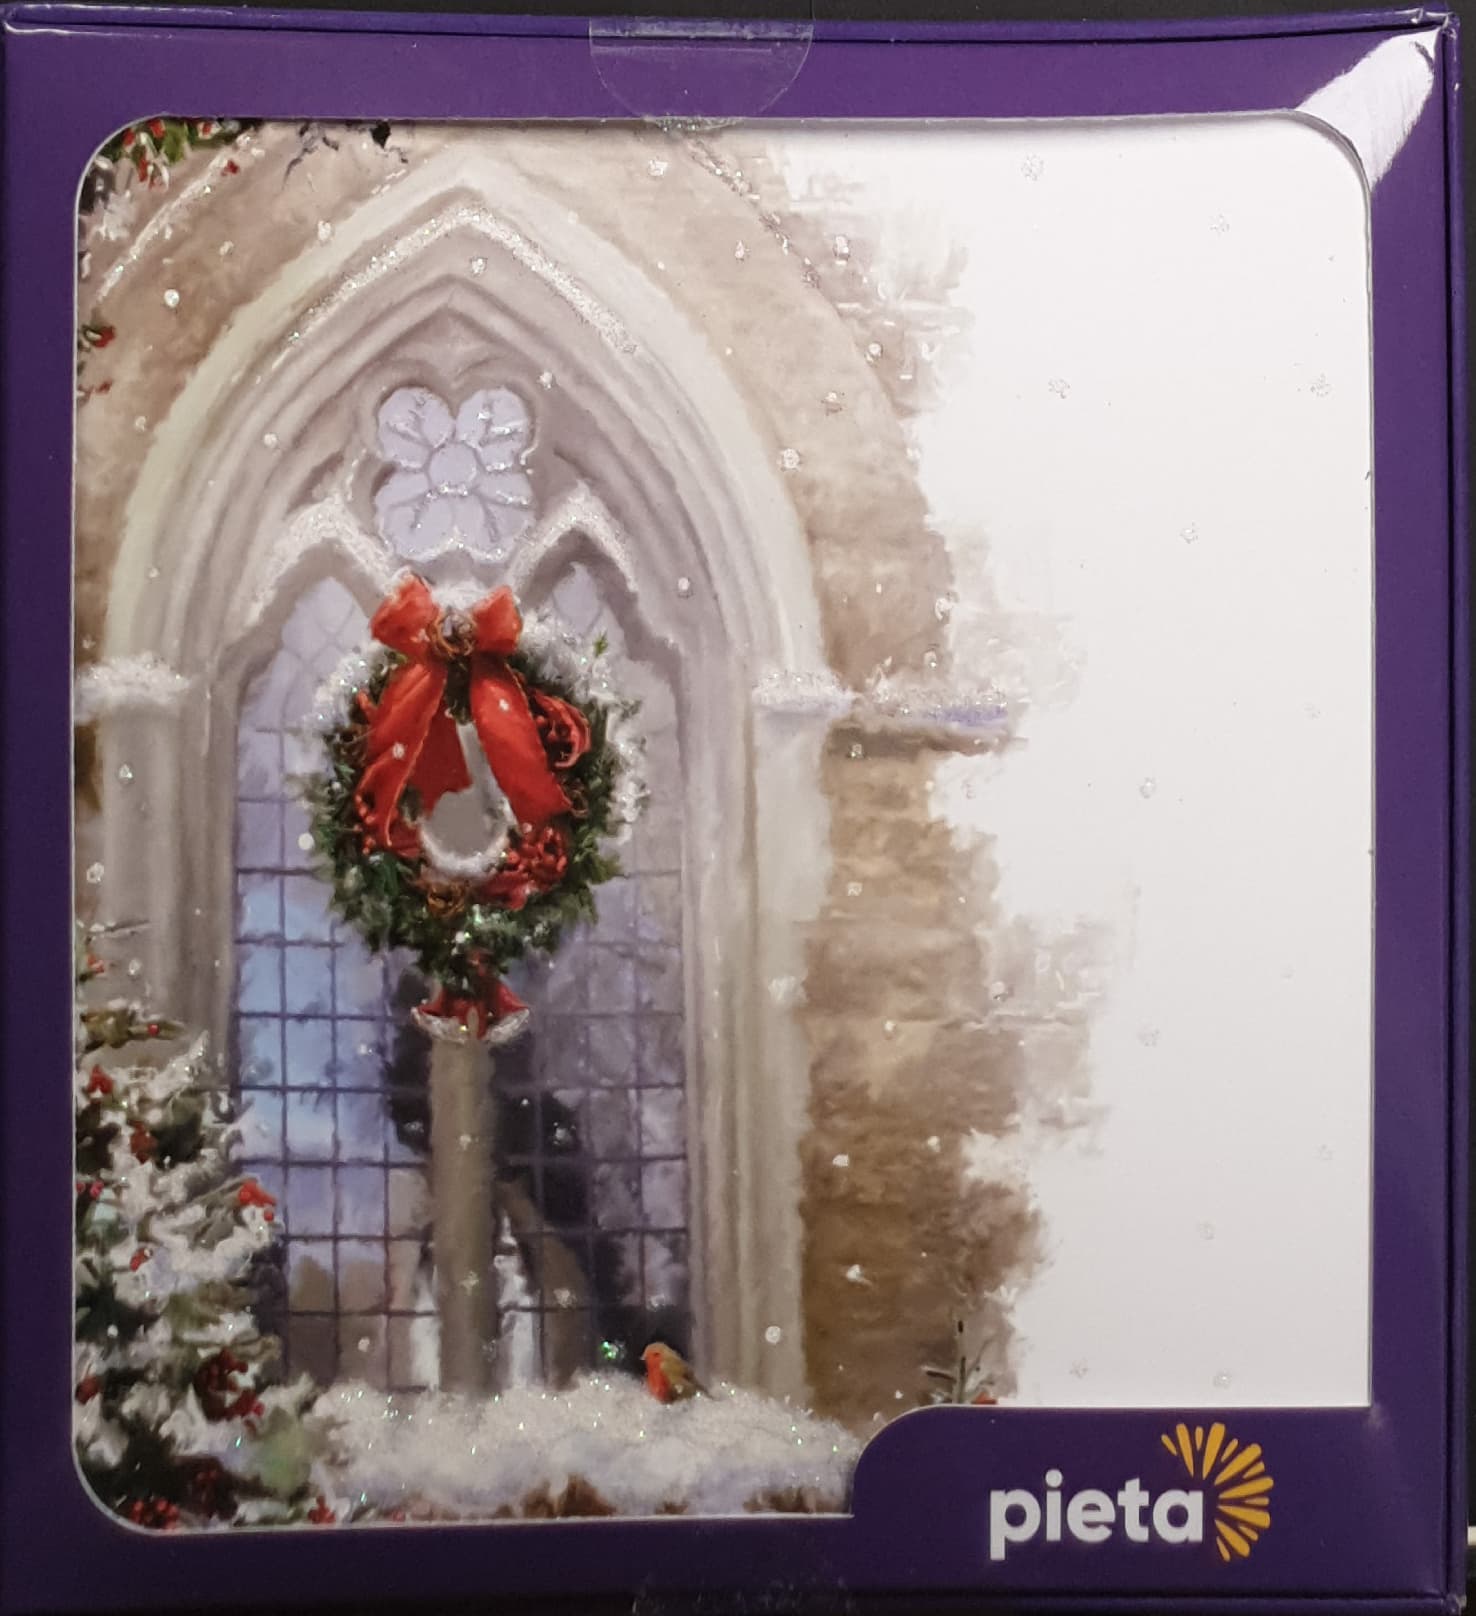 Charity Christmas Card (In Irish & English) - Box of 16 / Pieta - Christmas Wreath & Ribbon on Church Window